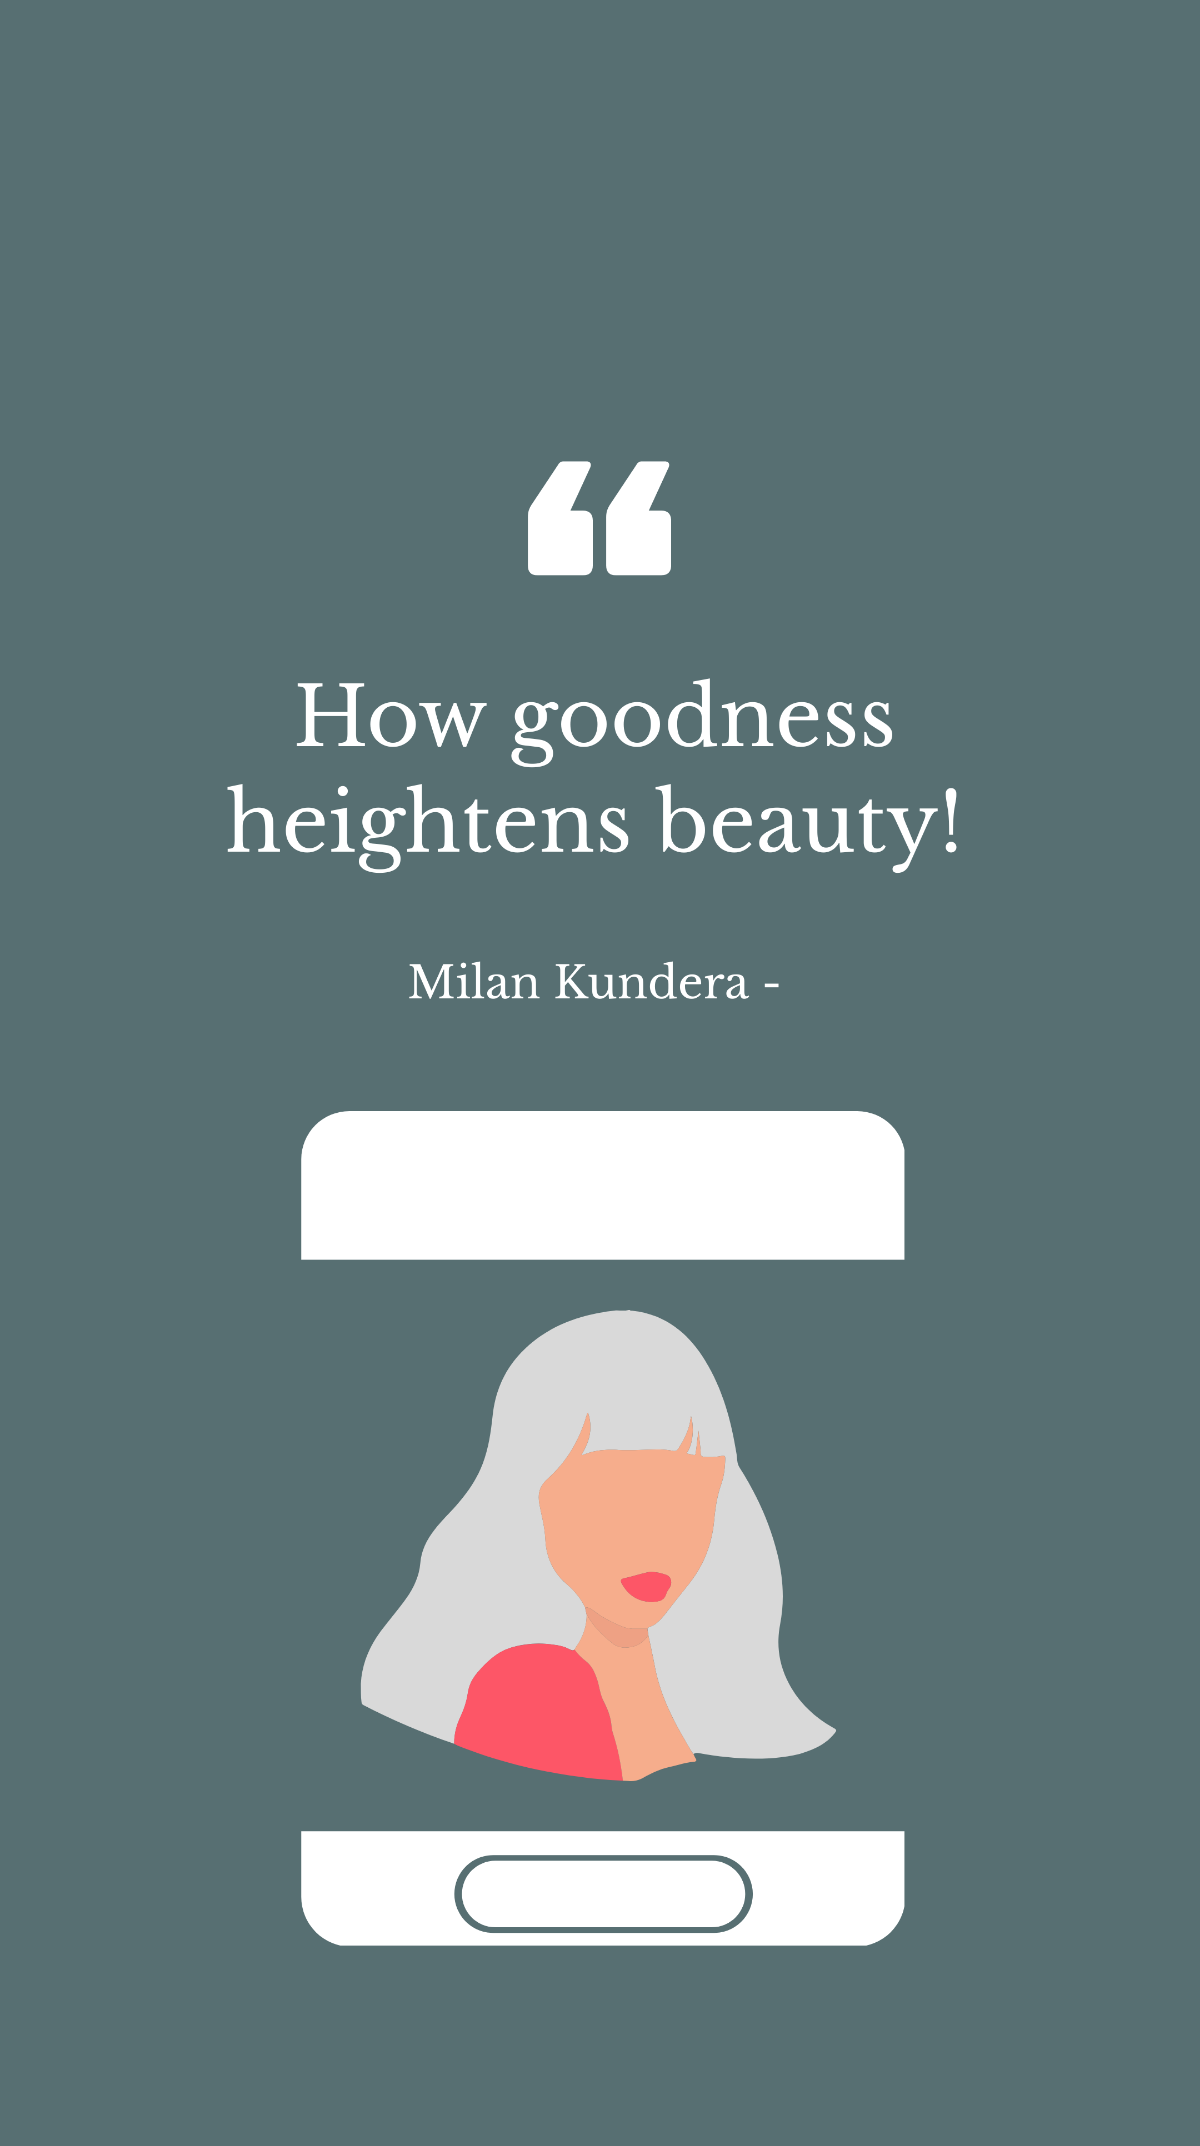 Milan Kundera - How goodness heightens beauty!